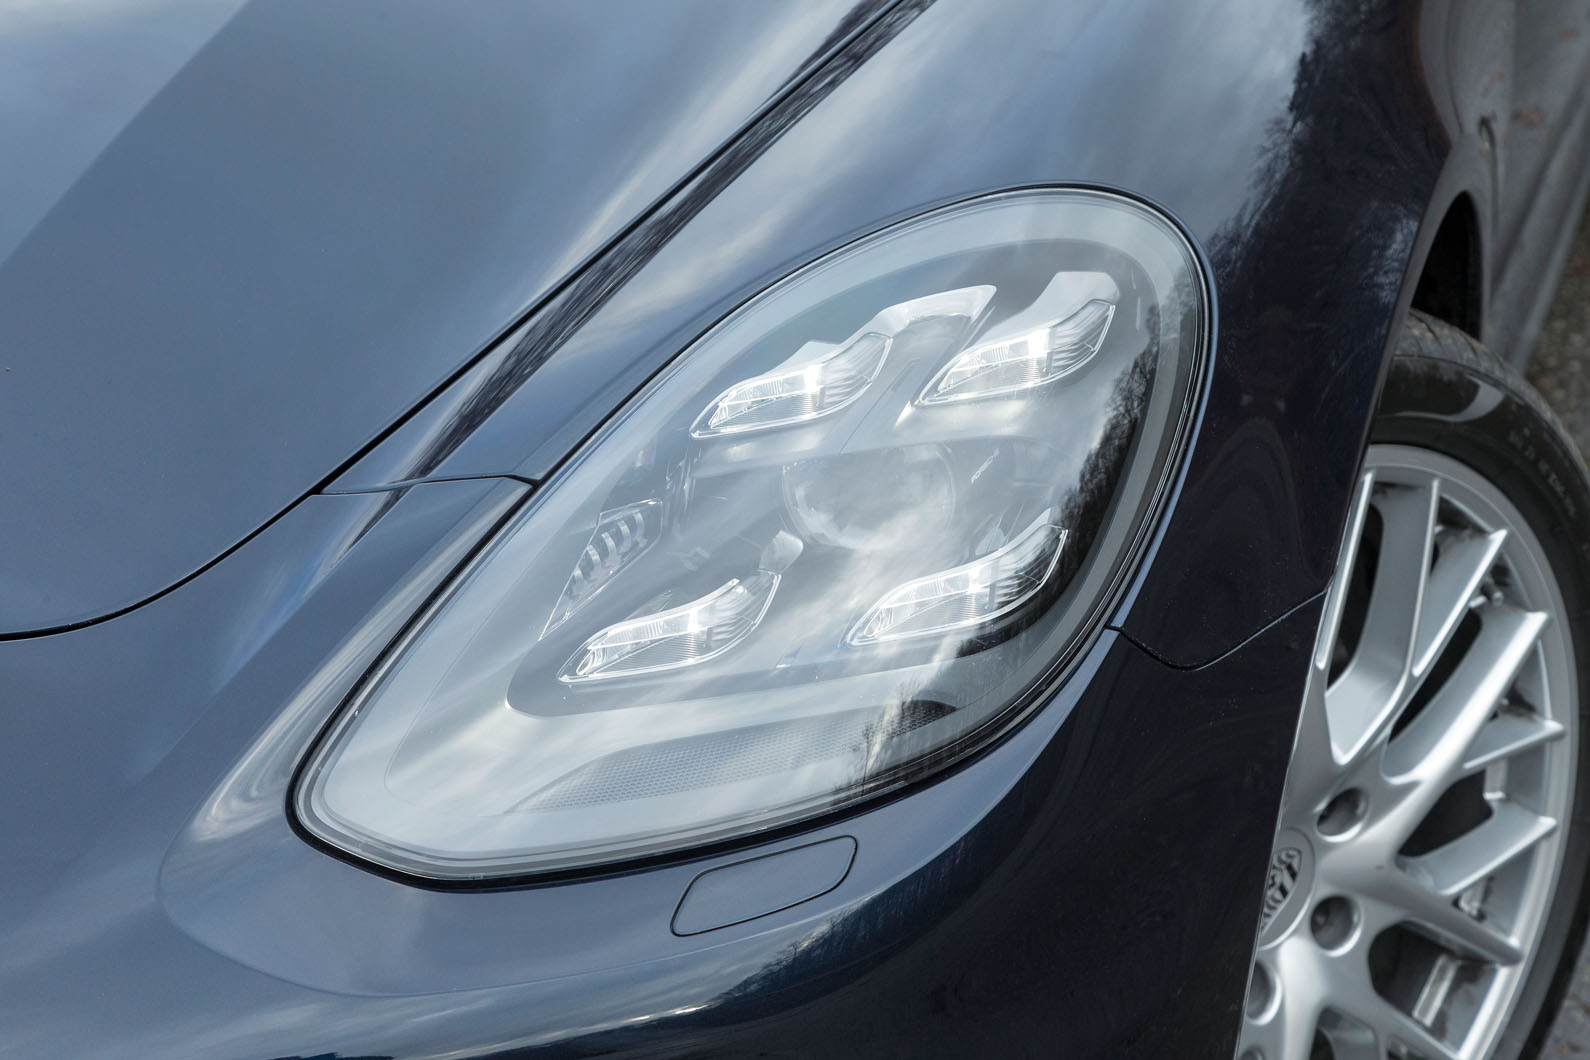 Porsche Panamera LED headlights